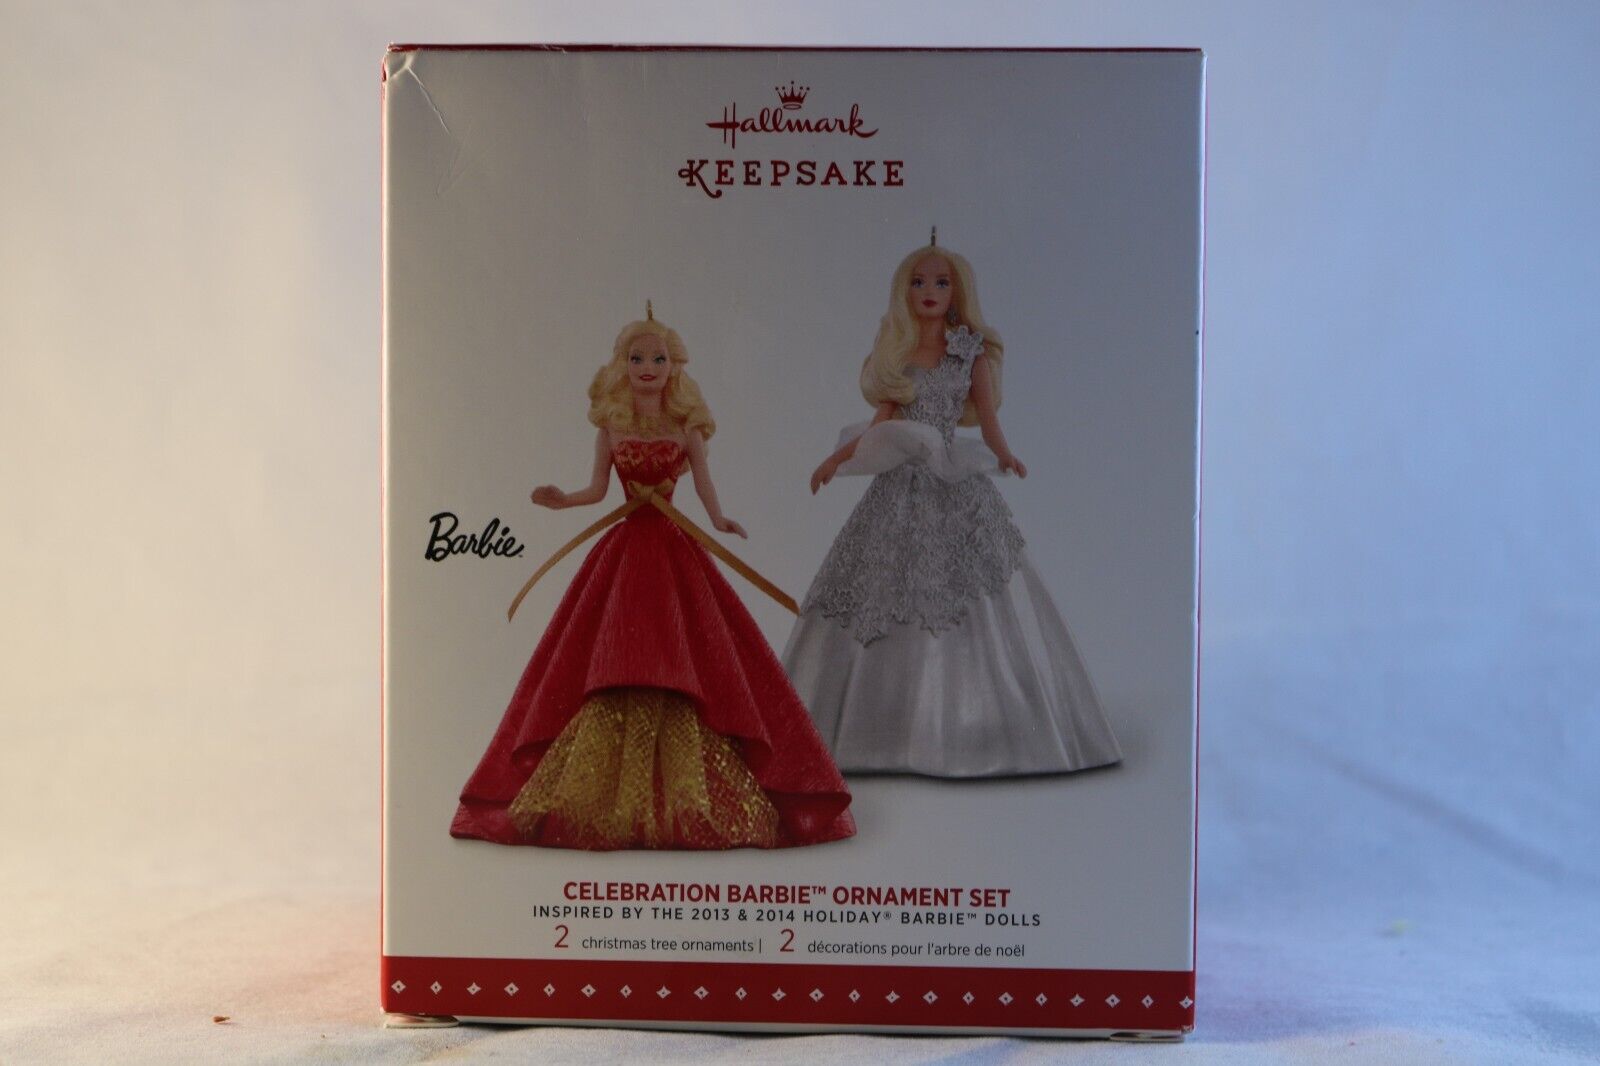 2015 Hallmark Keepsake Ornaments Celebration Barbie Ornament Set 2 Dolls Inside